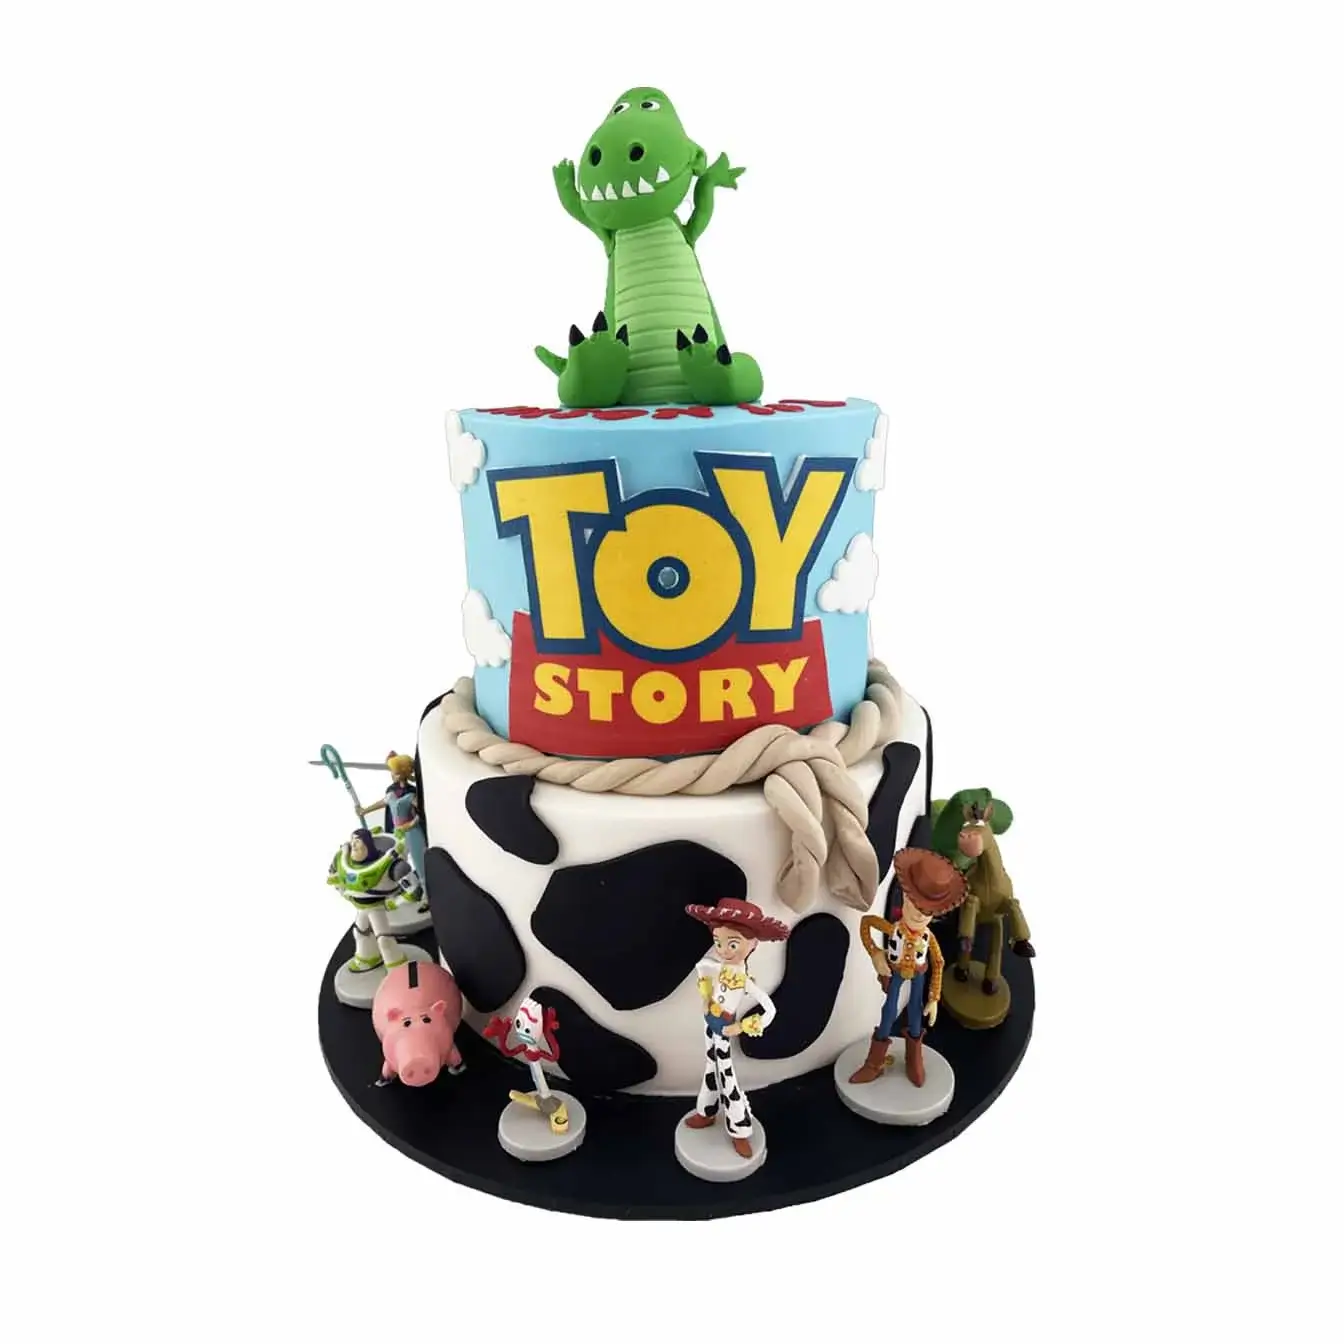 Two-Tier Toy Story Adventure Cake with Mr. Potato Head, Buzz, Woody, Bo Peep, Alien, and Slinky Dog